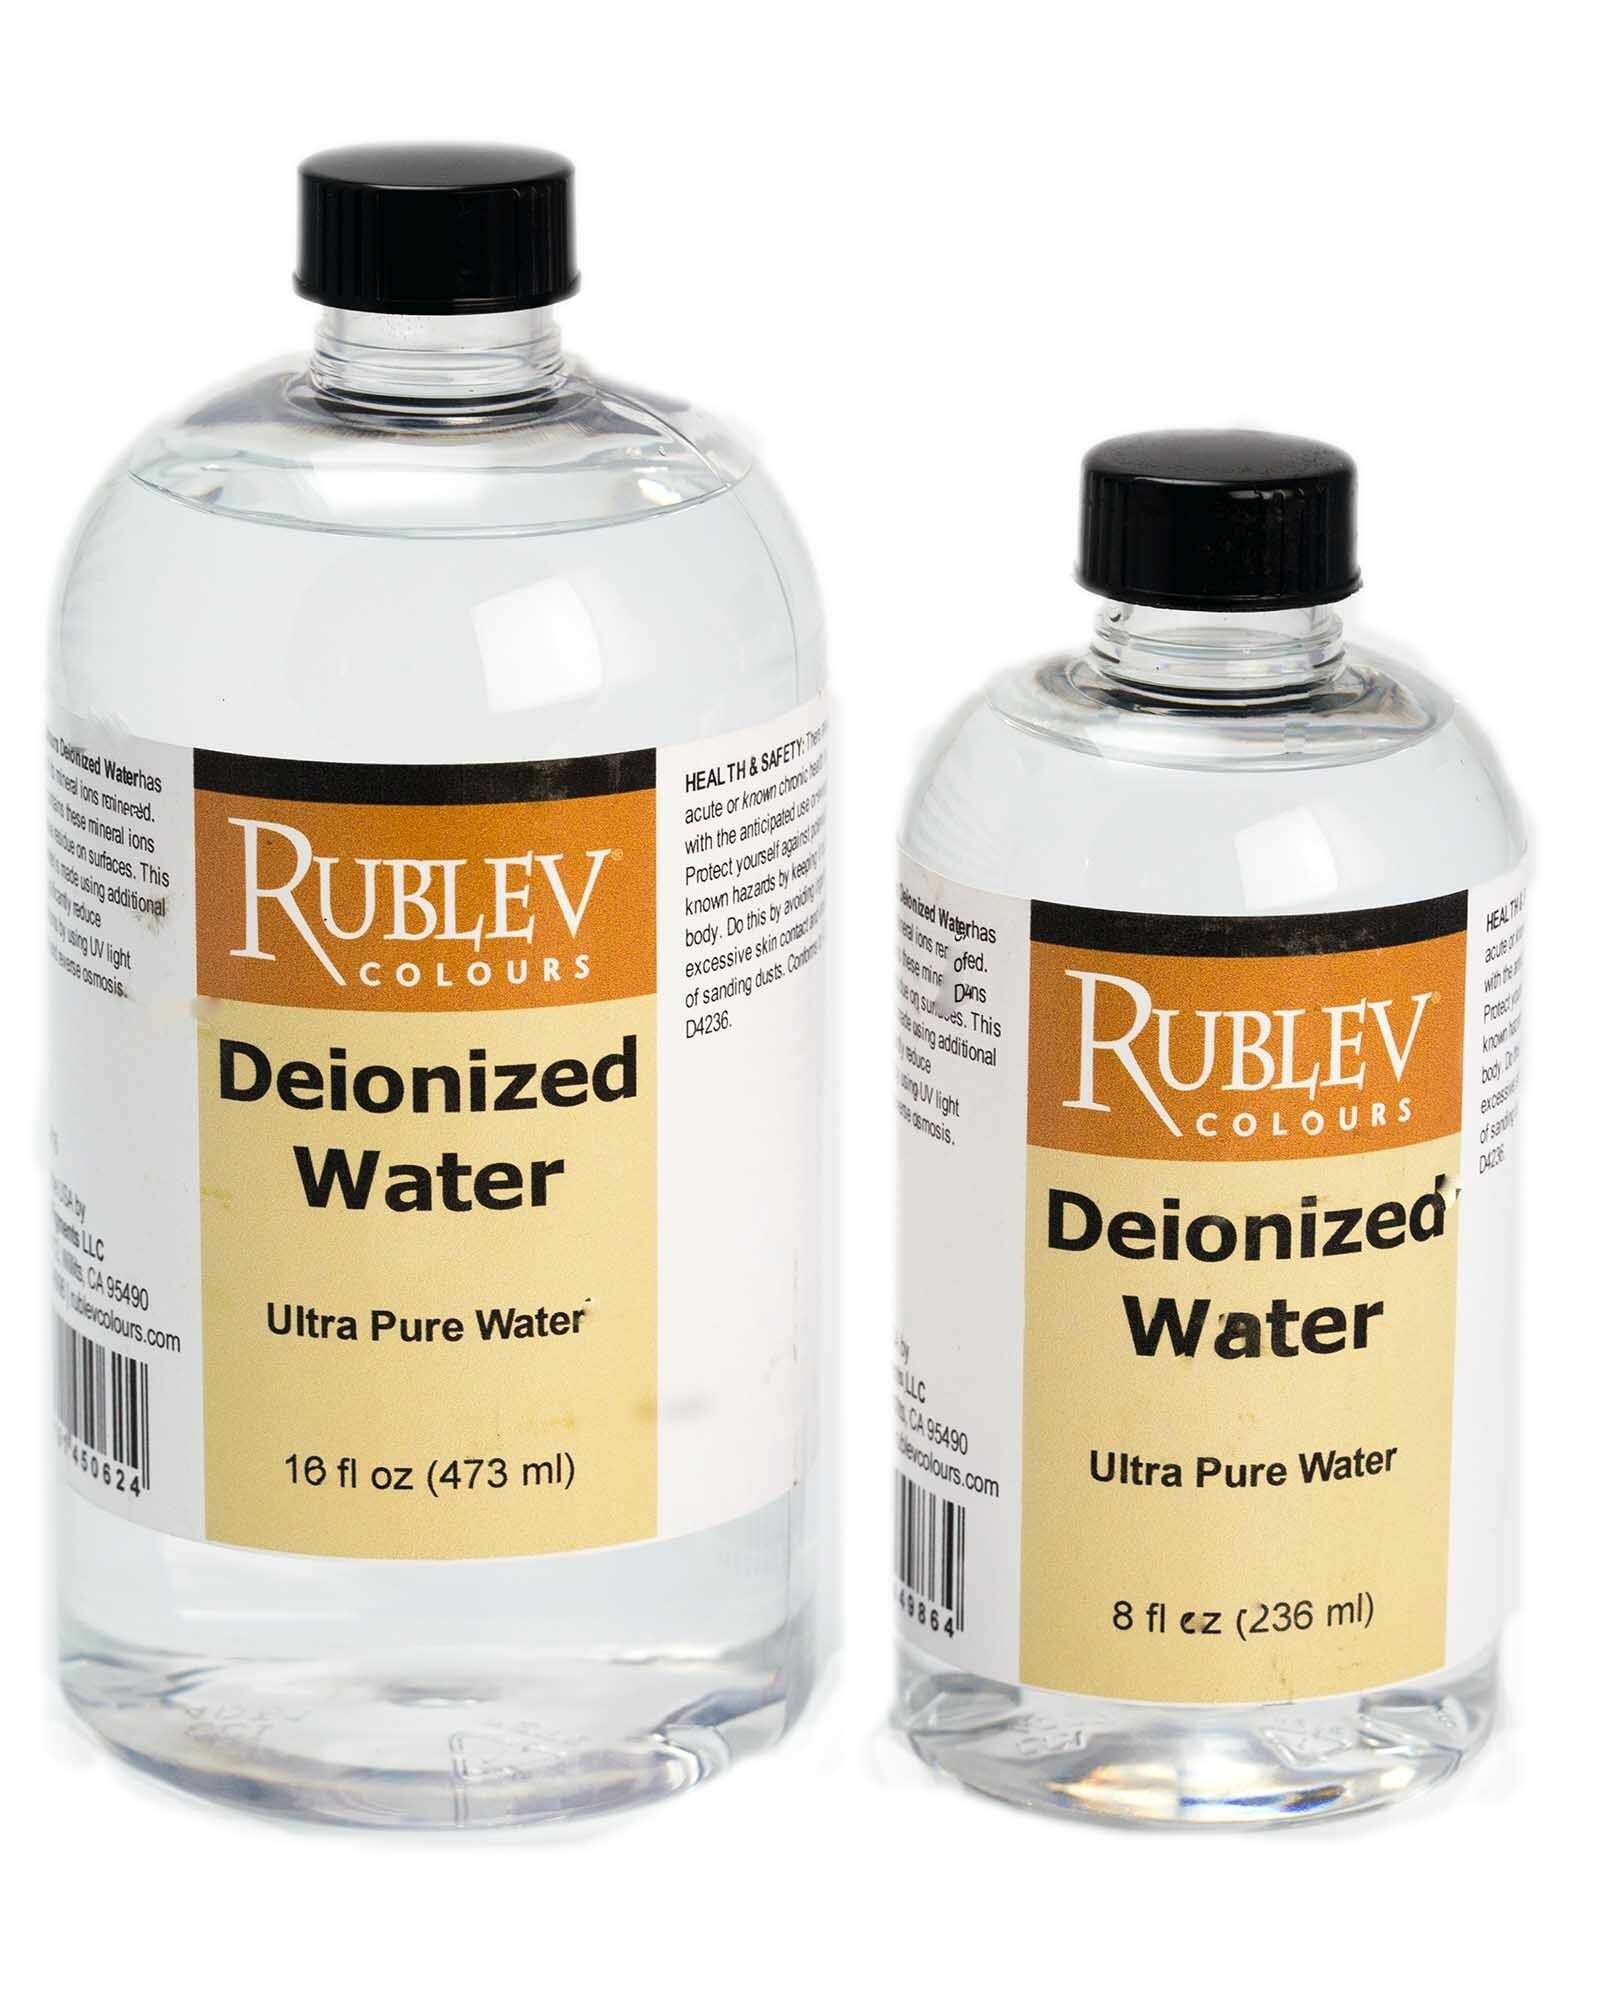 Deionized Water